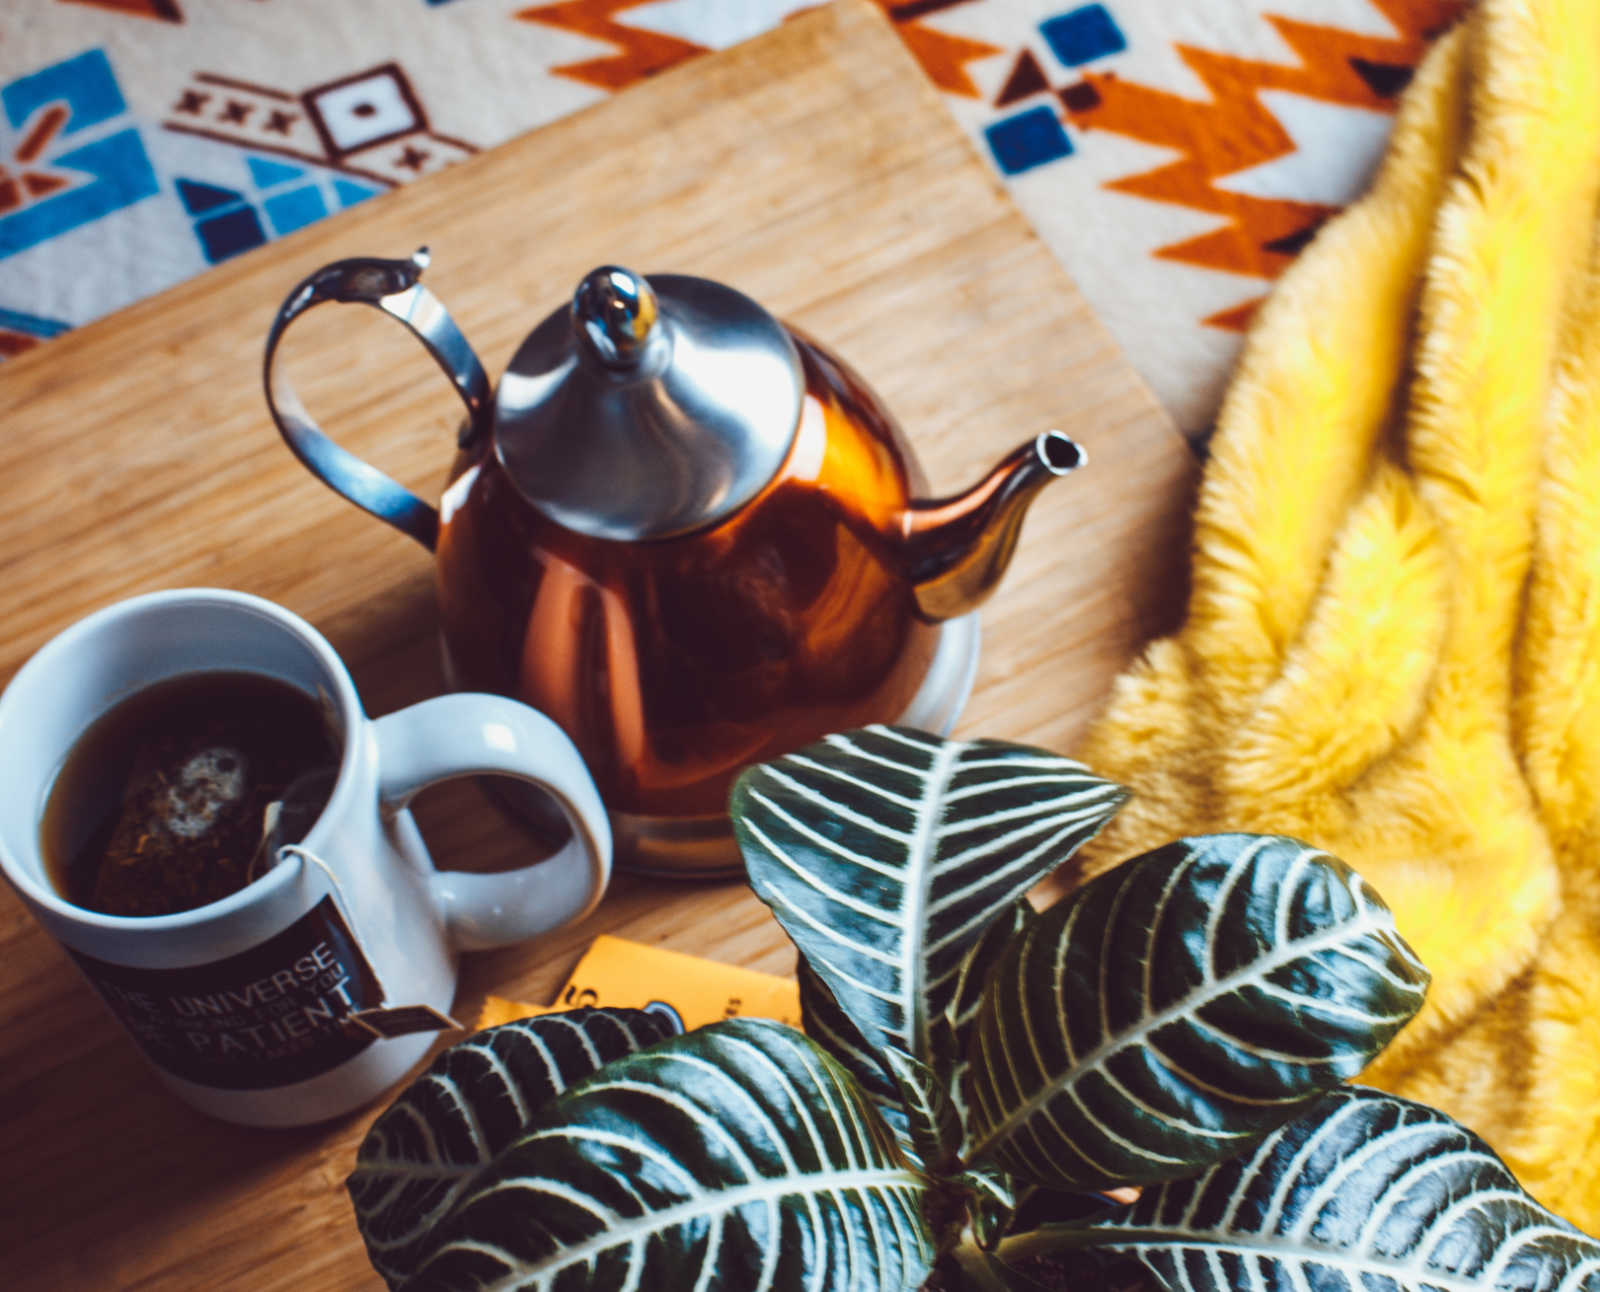 Paris Breakfast — Cup & Kettle Tea